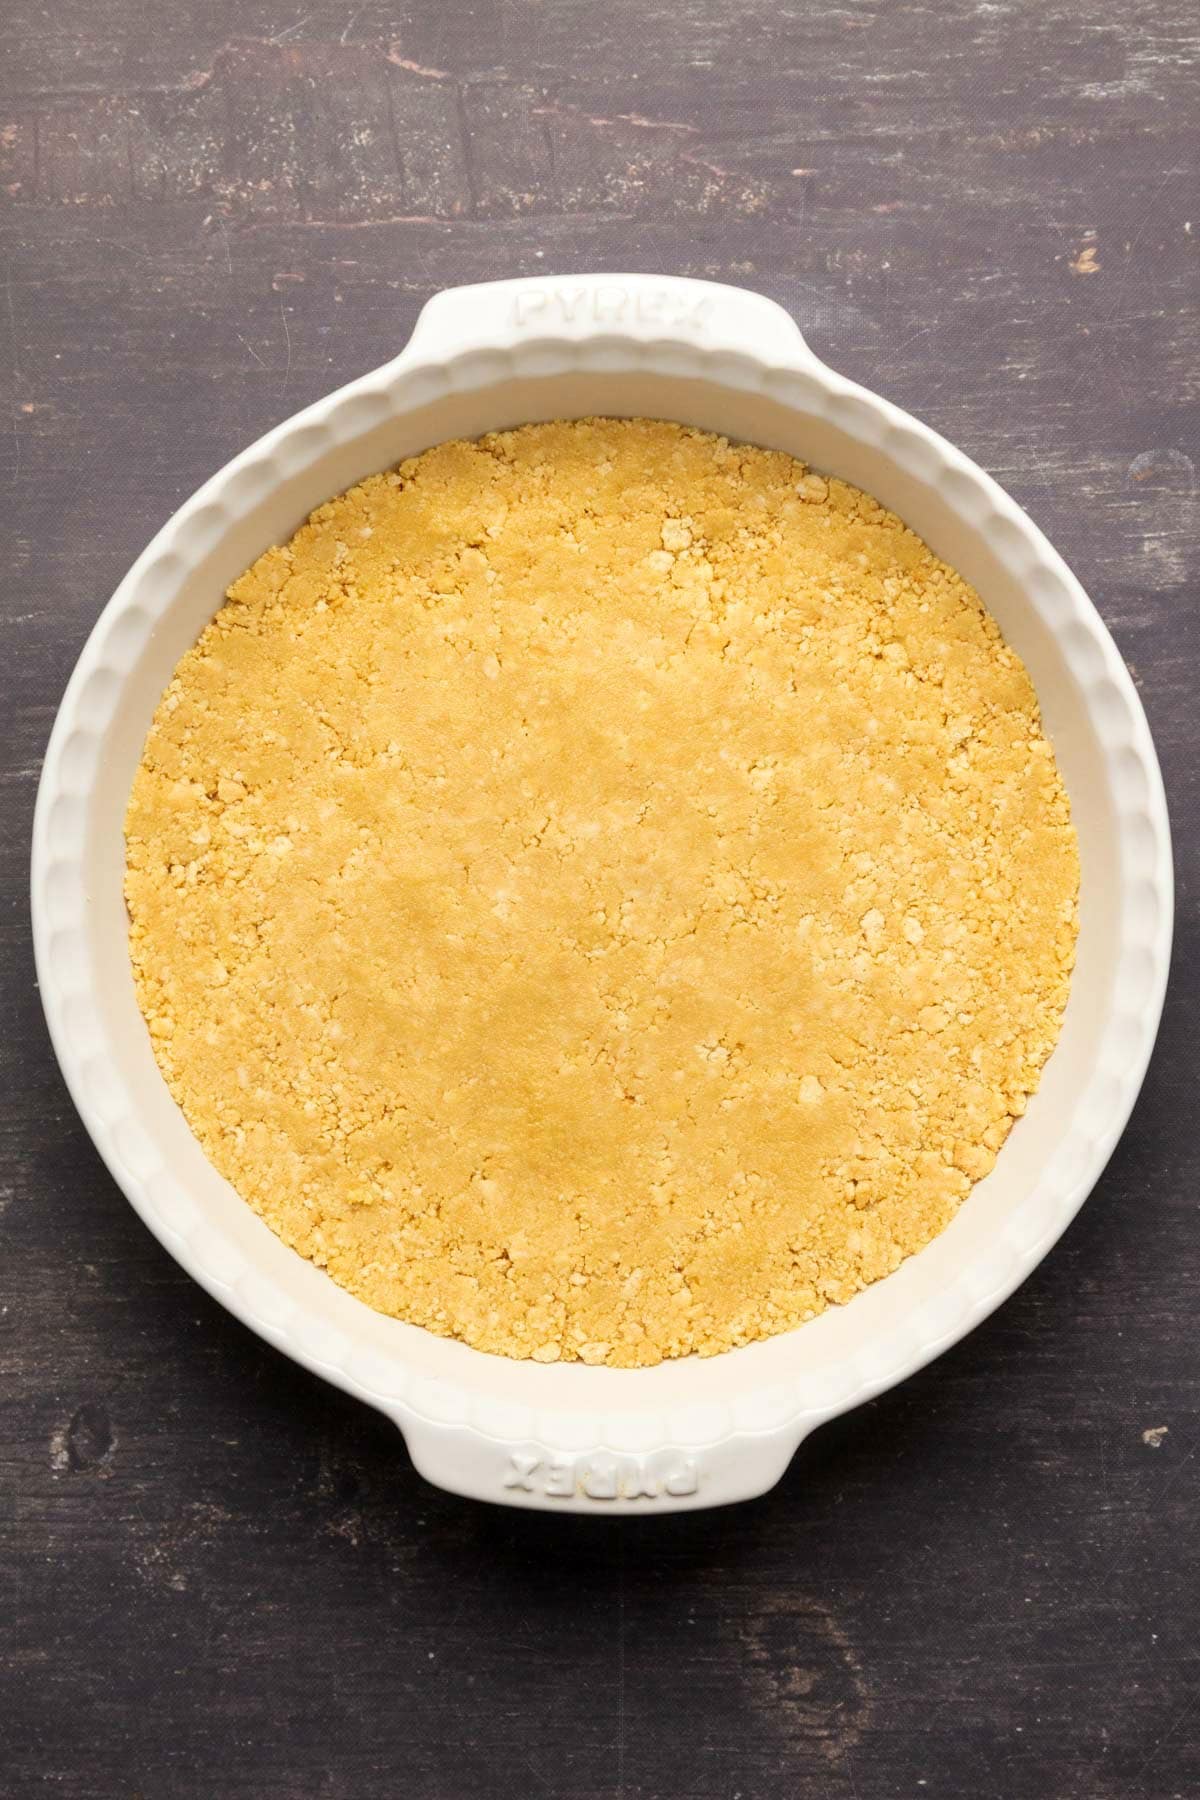 Golden oreo crust pressed down into a white pie dish.